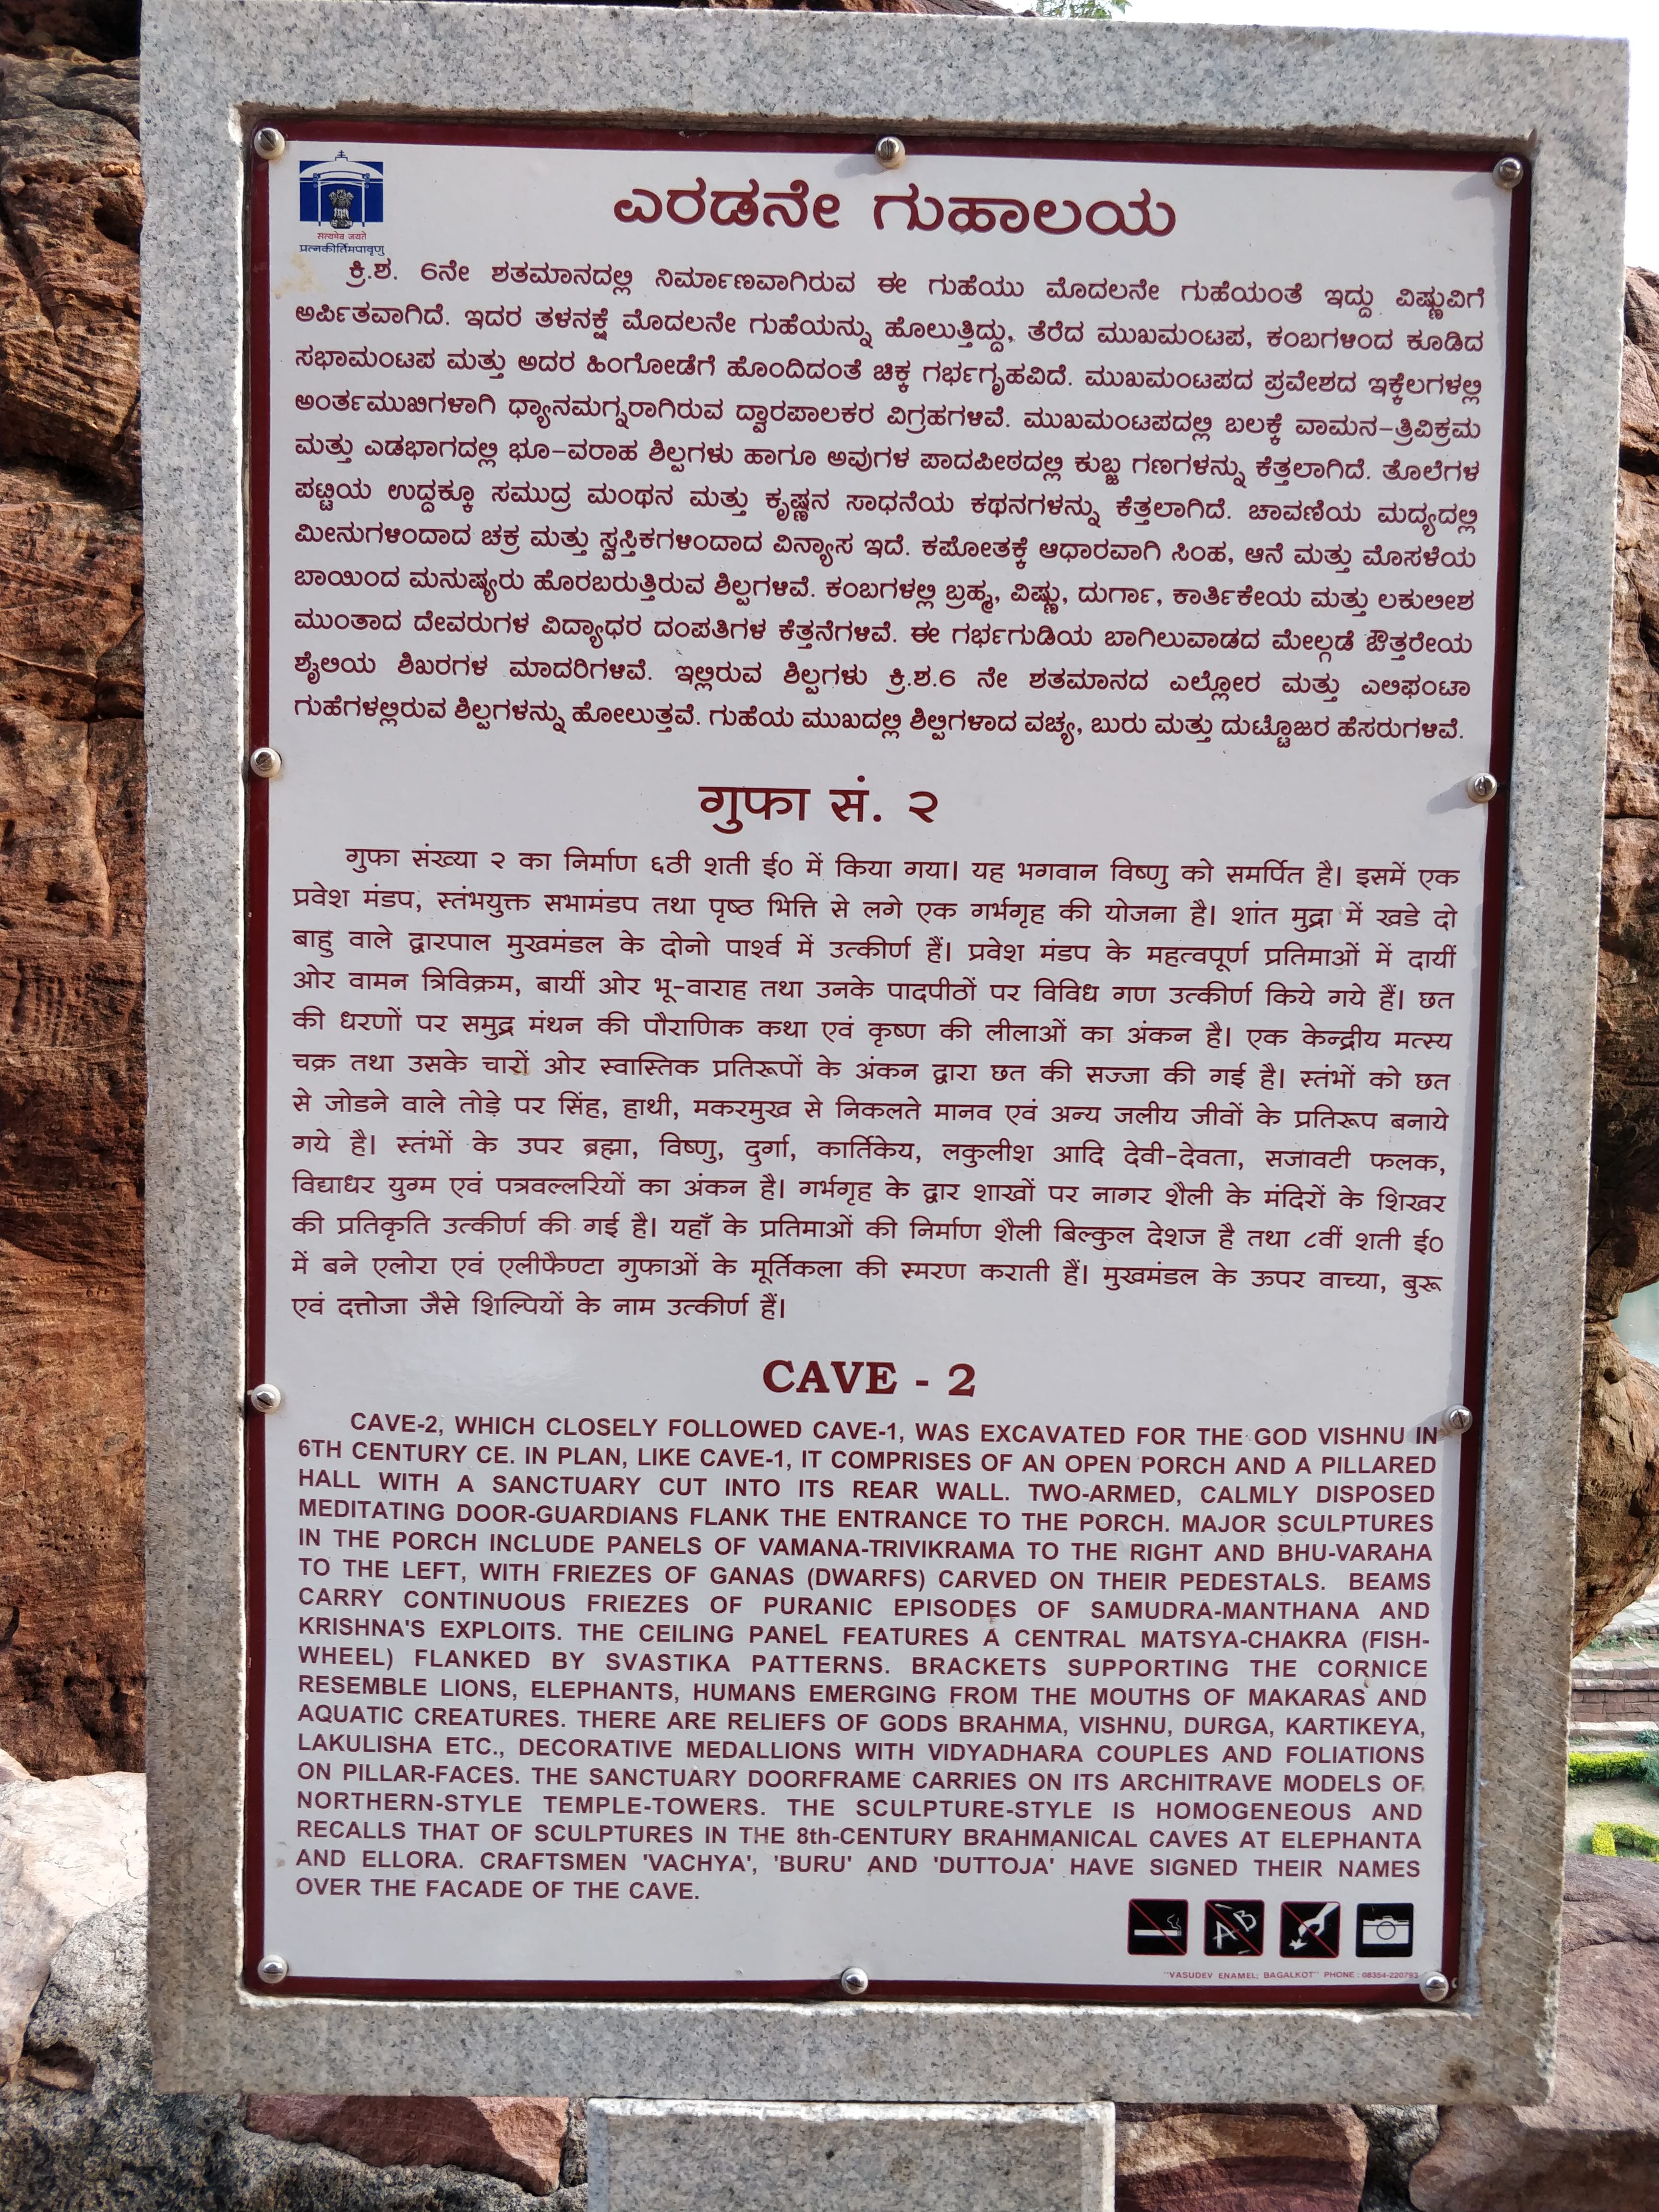 info board - Second cave temple